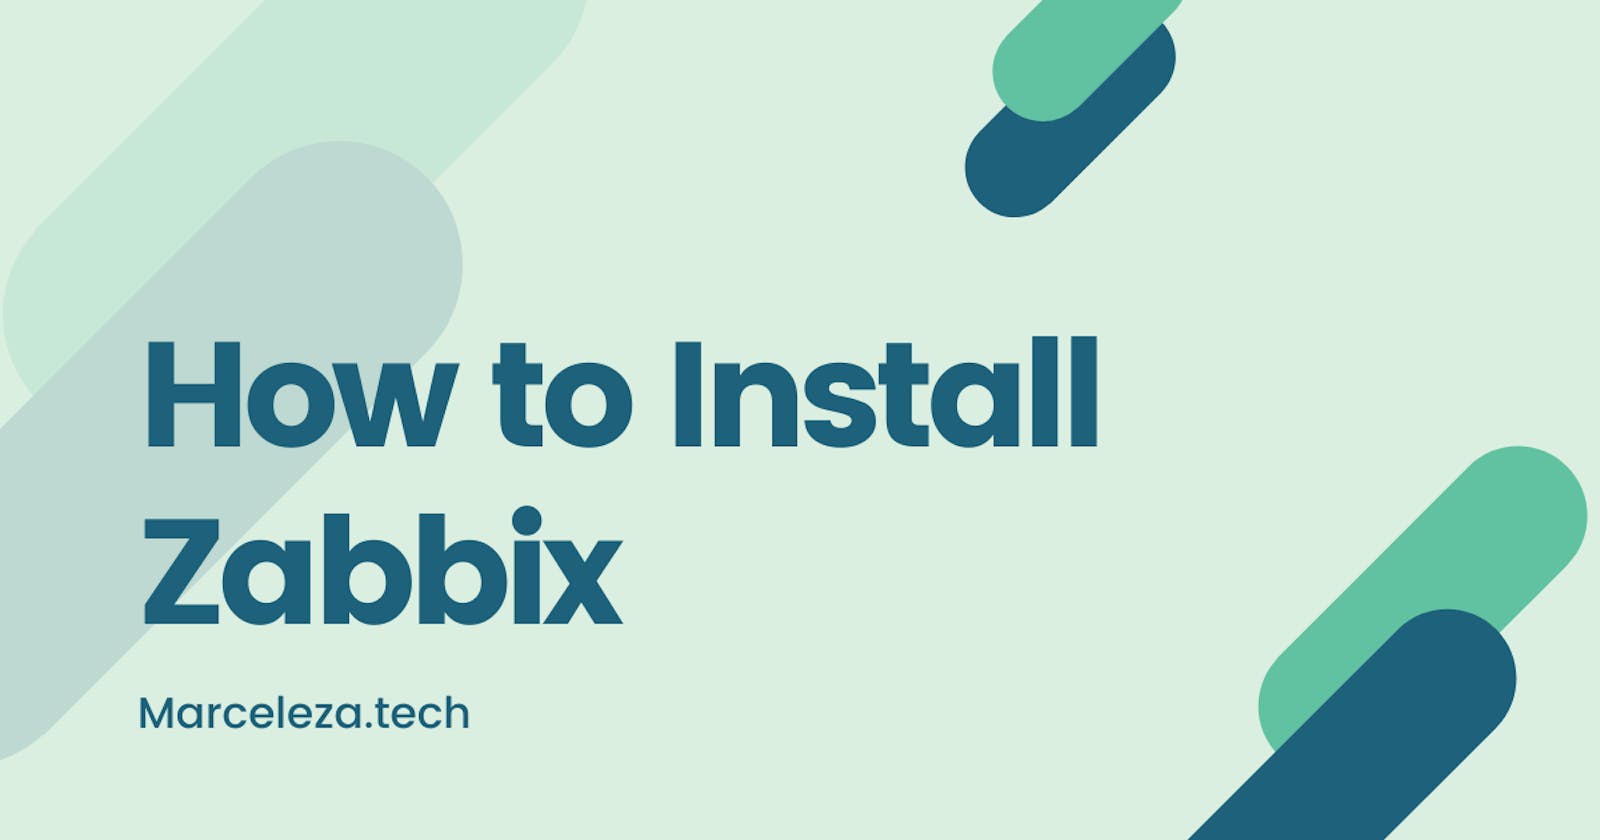 How to Install Zabbix